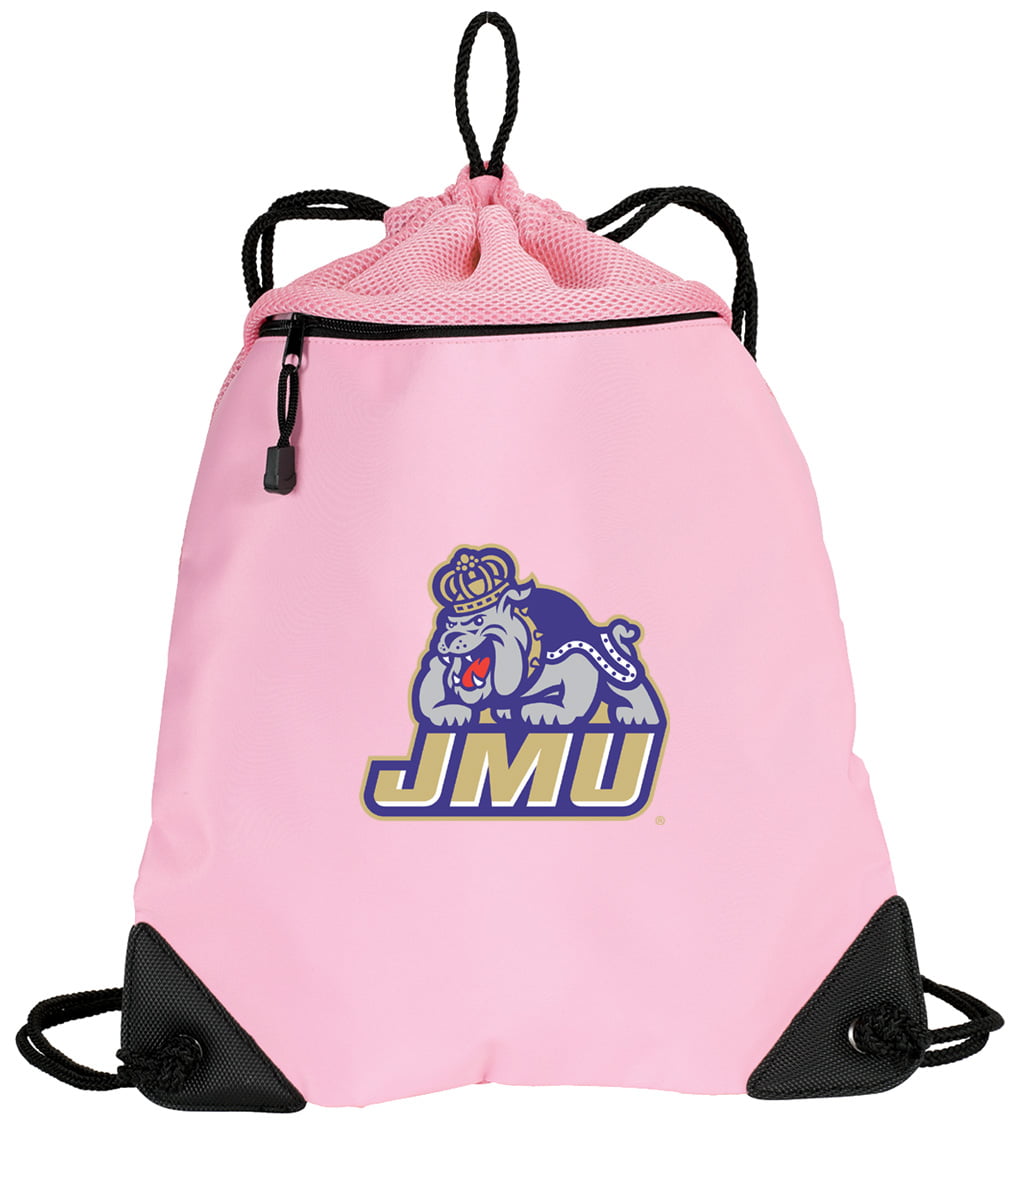 Broad Bay Cute JMU Drawstring Backpack Ladies James Madison University Cinch Bag Unique MESH & Microfiber 